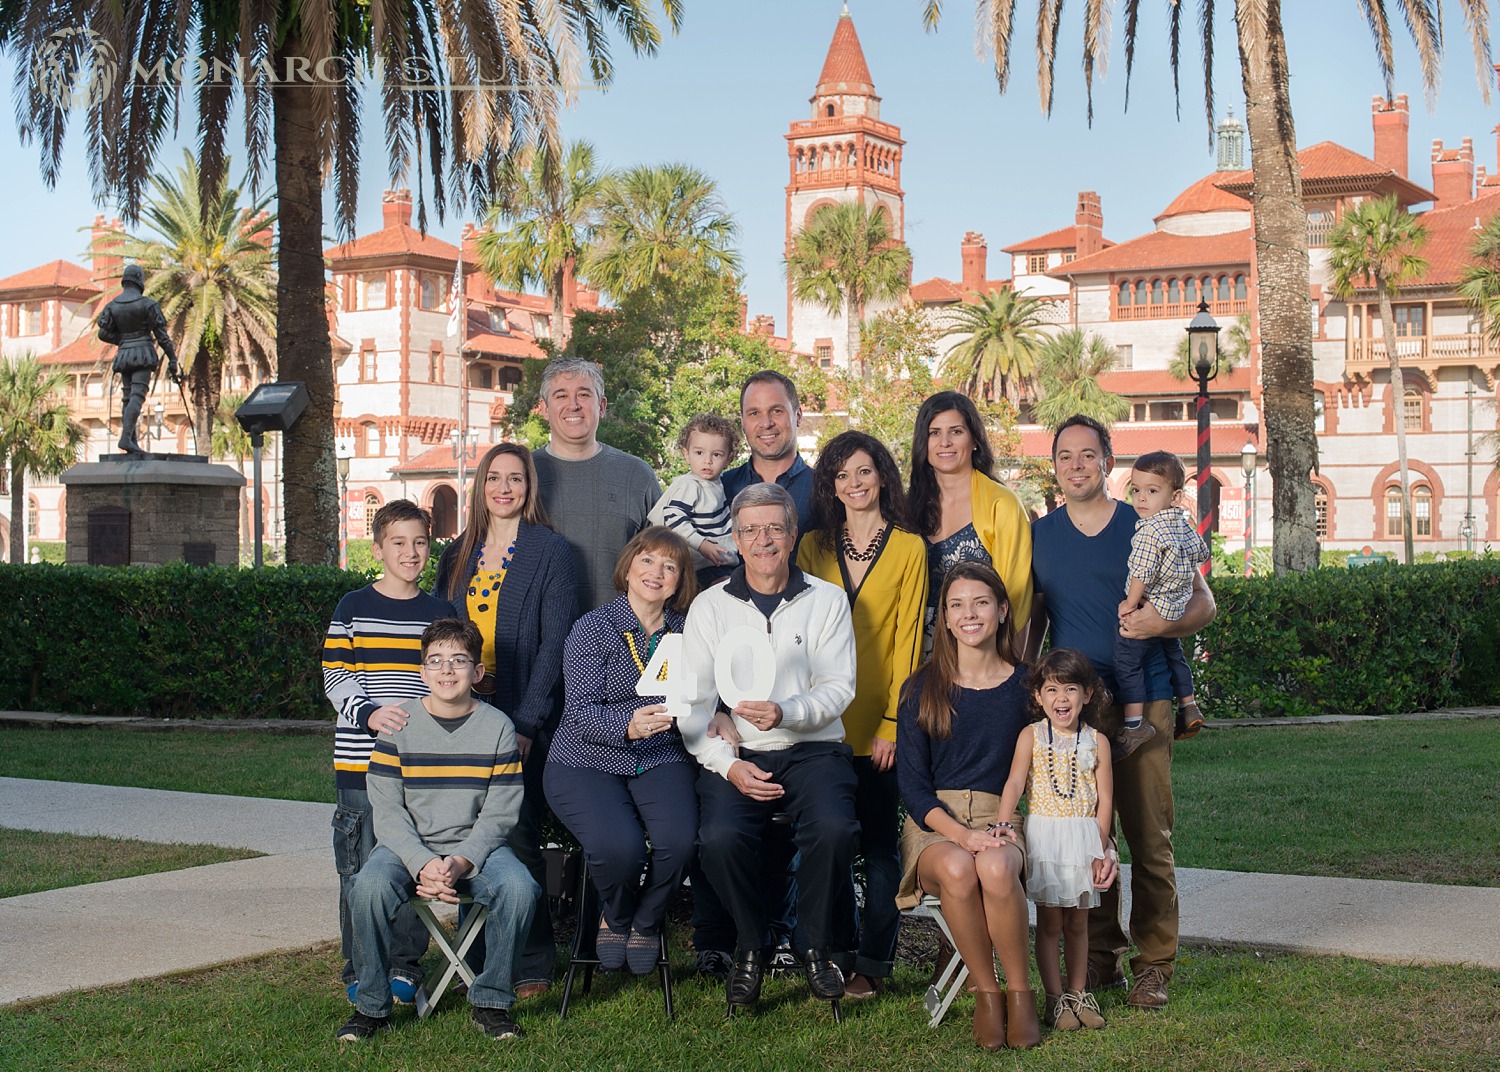 St.-Augustine-Family-Photographer-Large-Family-Reunion-Posing_0006.jpg